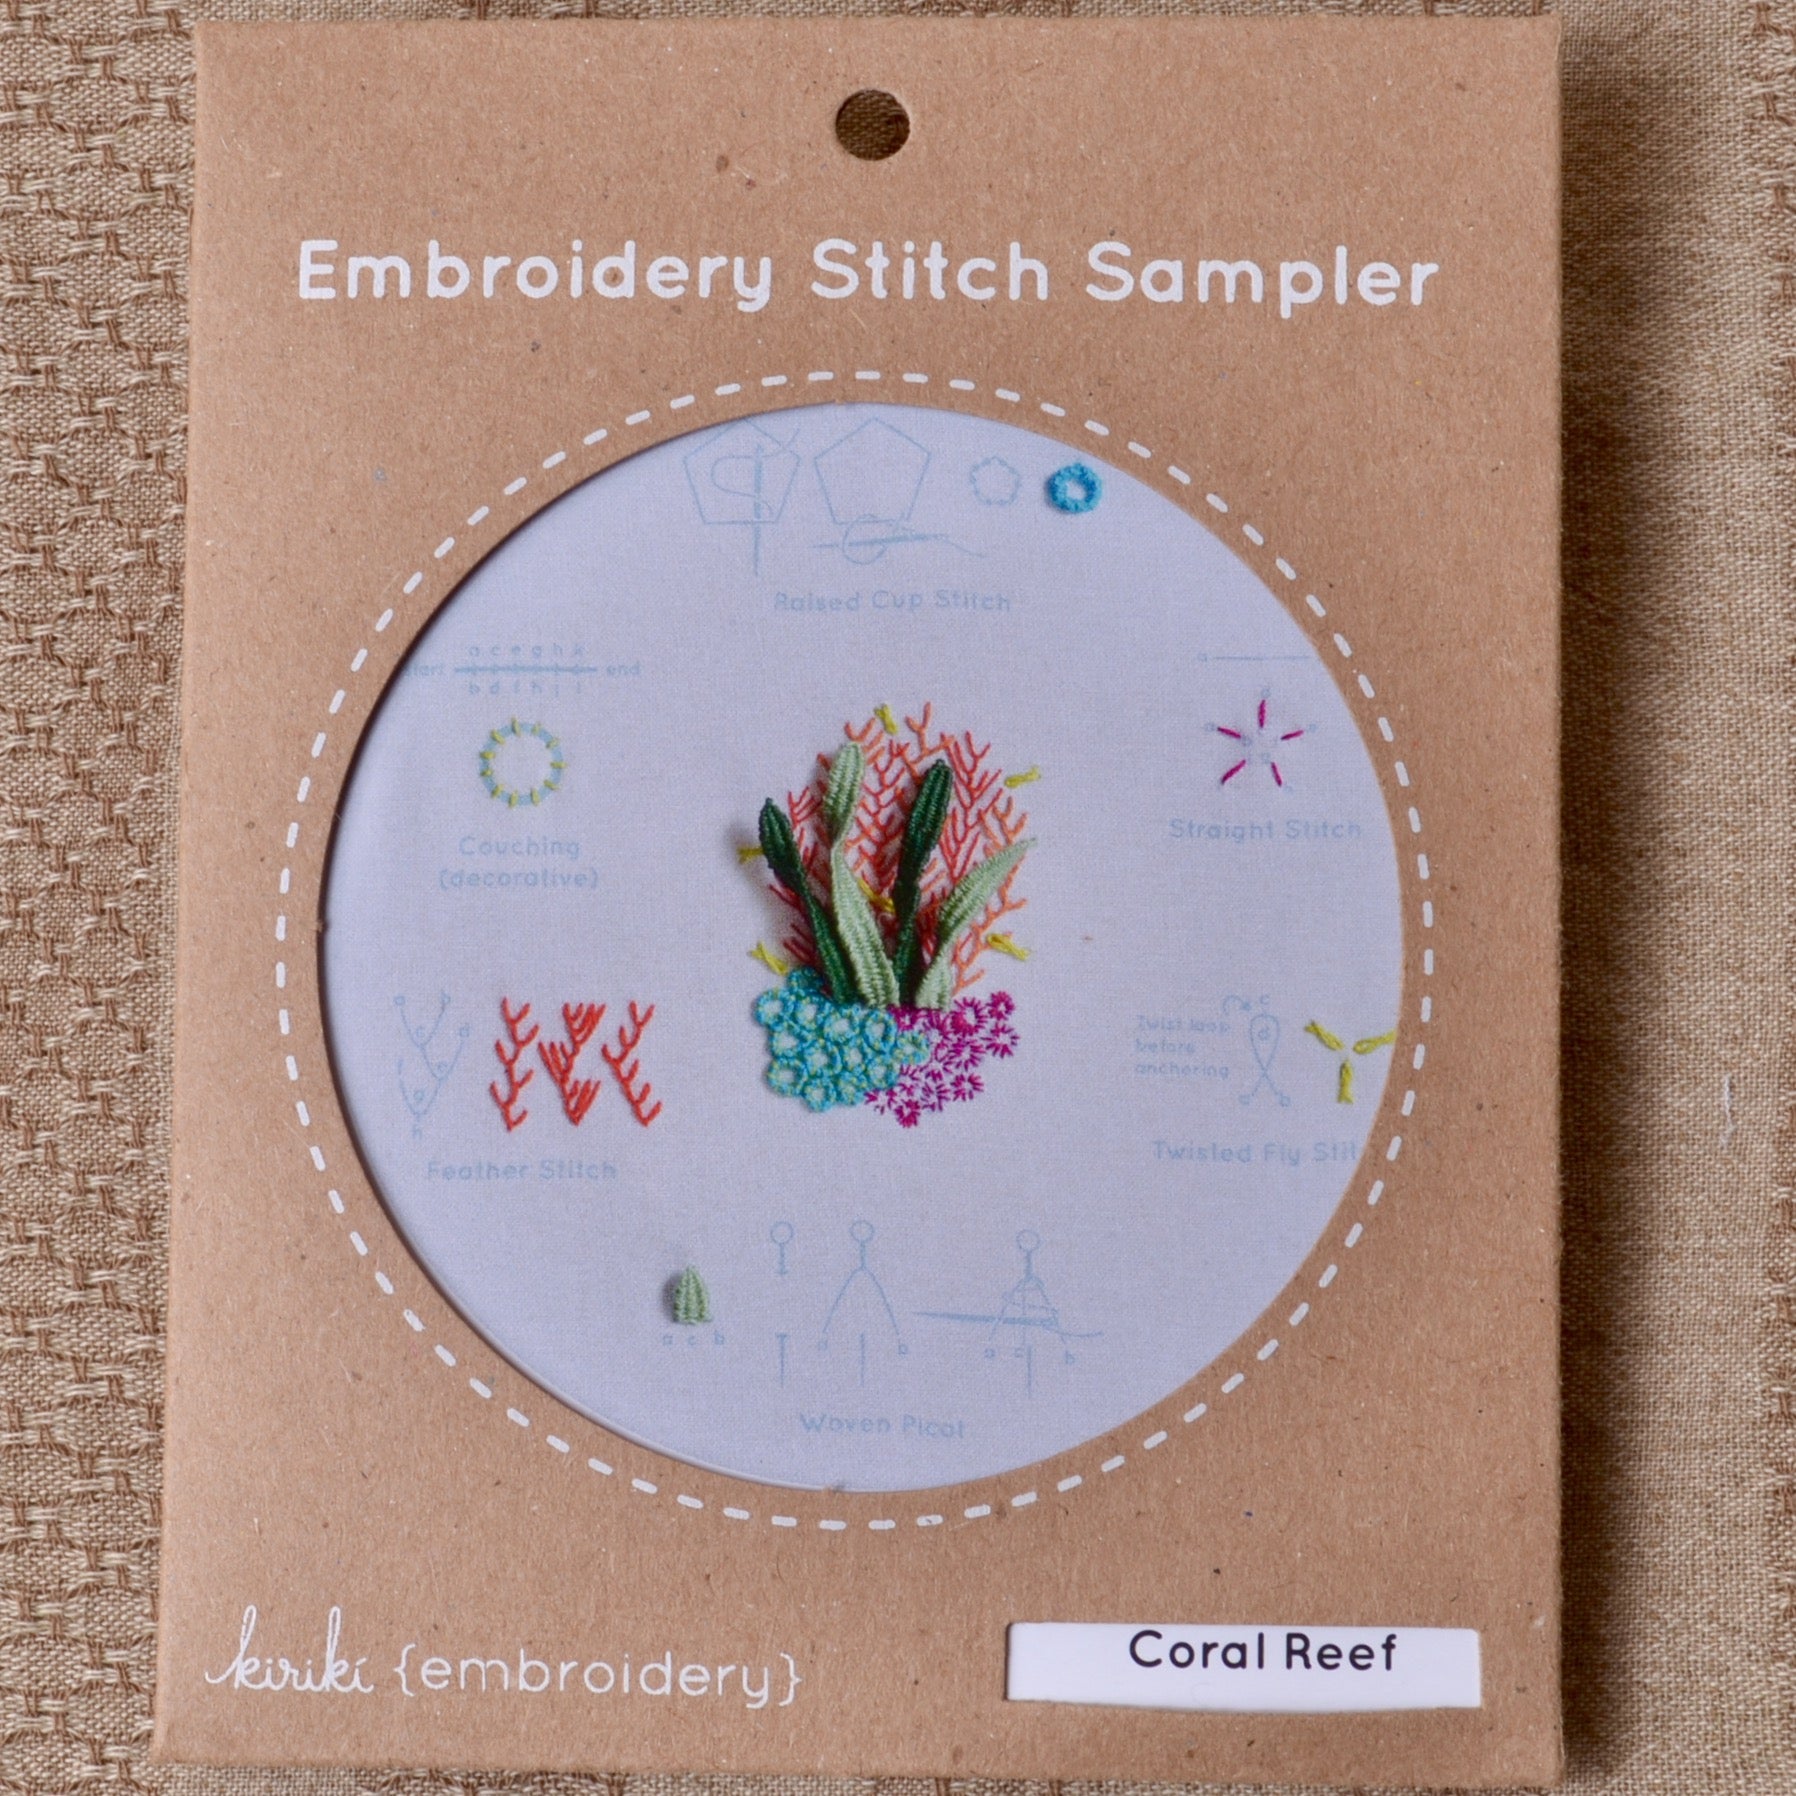 Needles & Thimbles – Modern Stitch Co